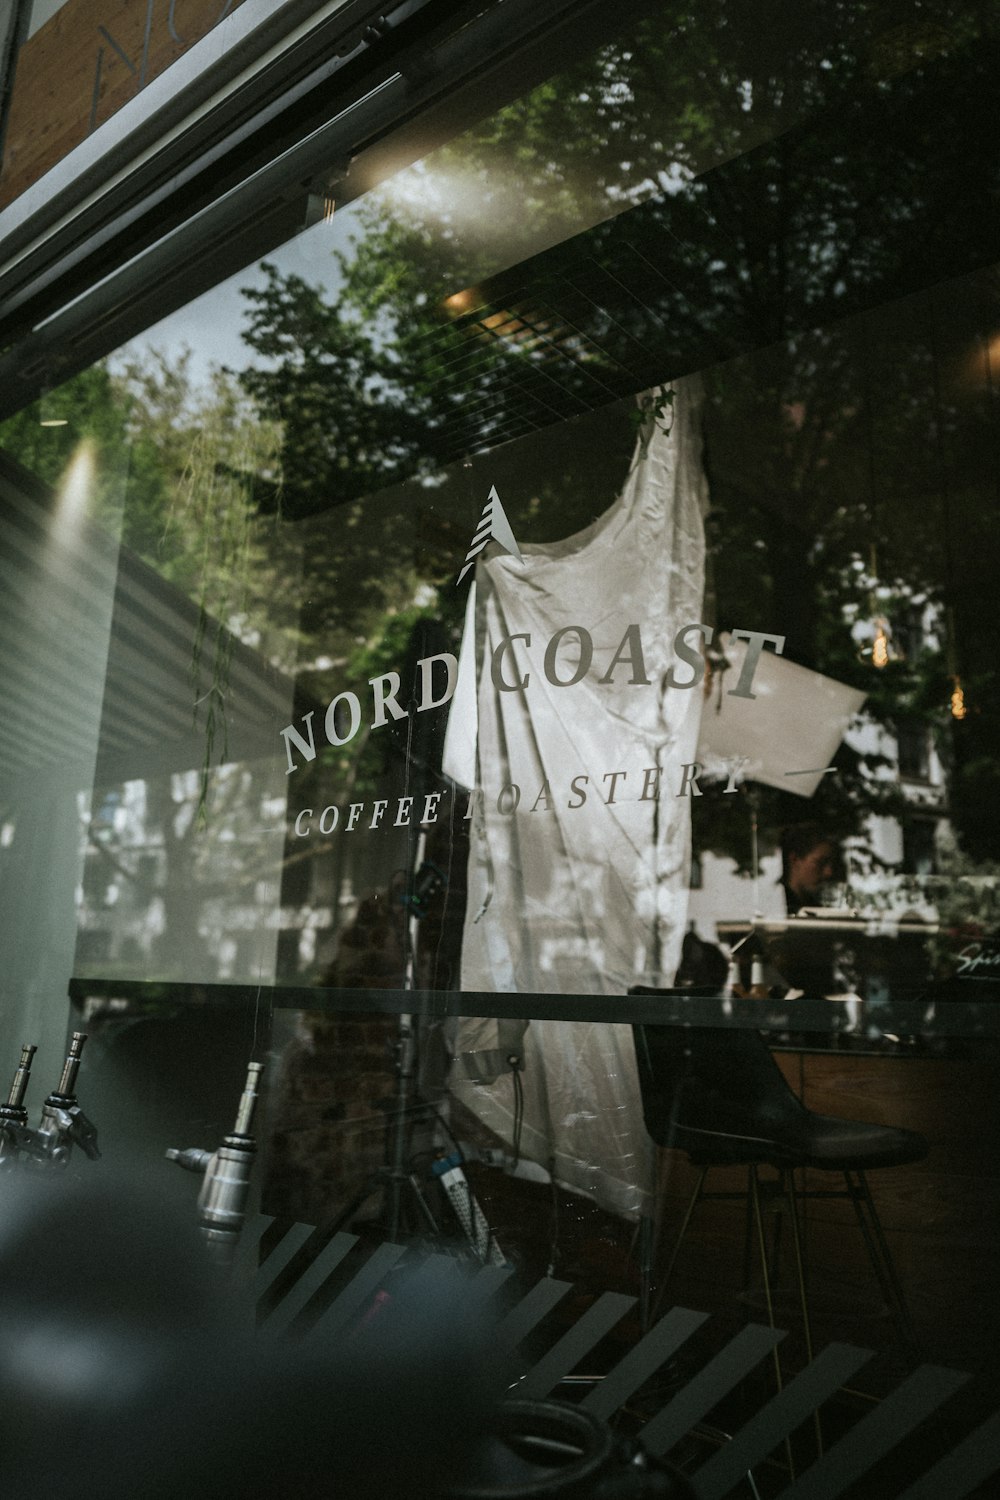 Nordcoast Coffee &Steak window